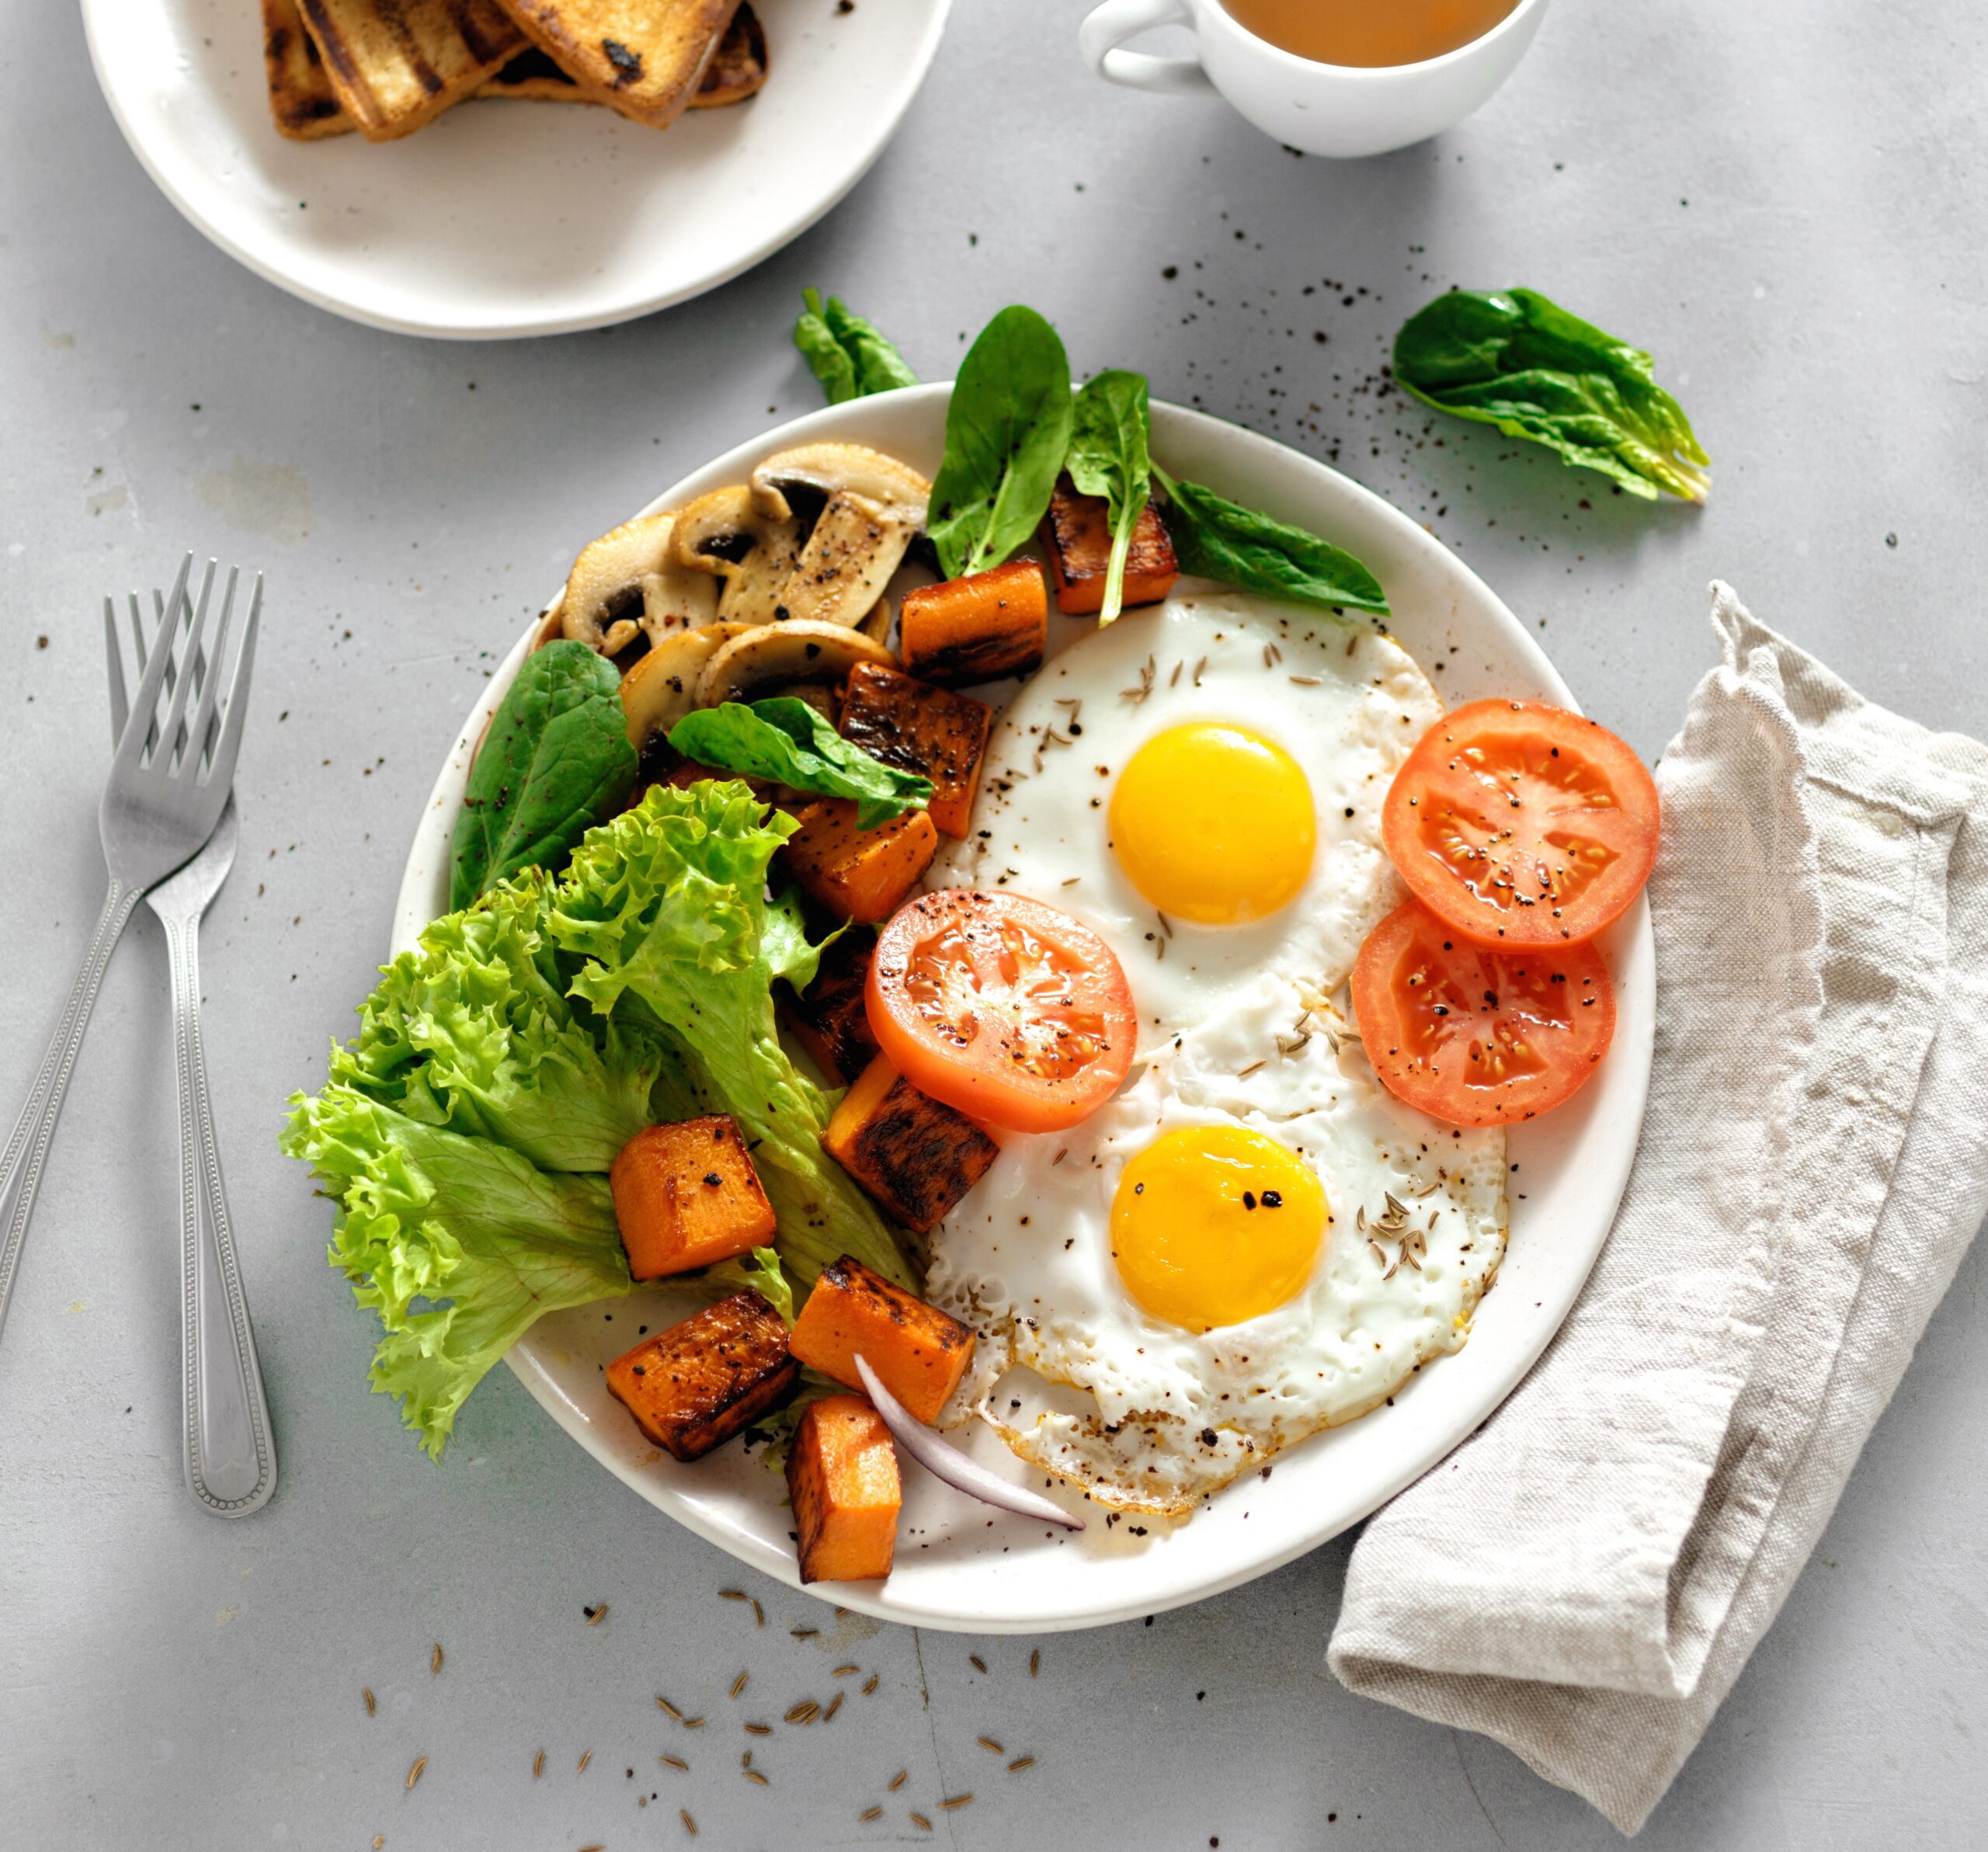 Healthy Habits Start With Ohio Eggs